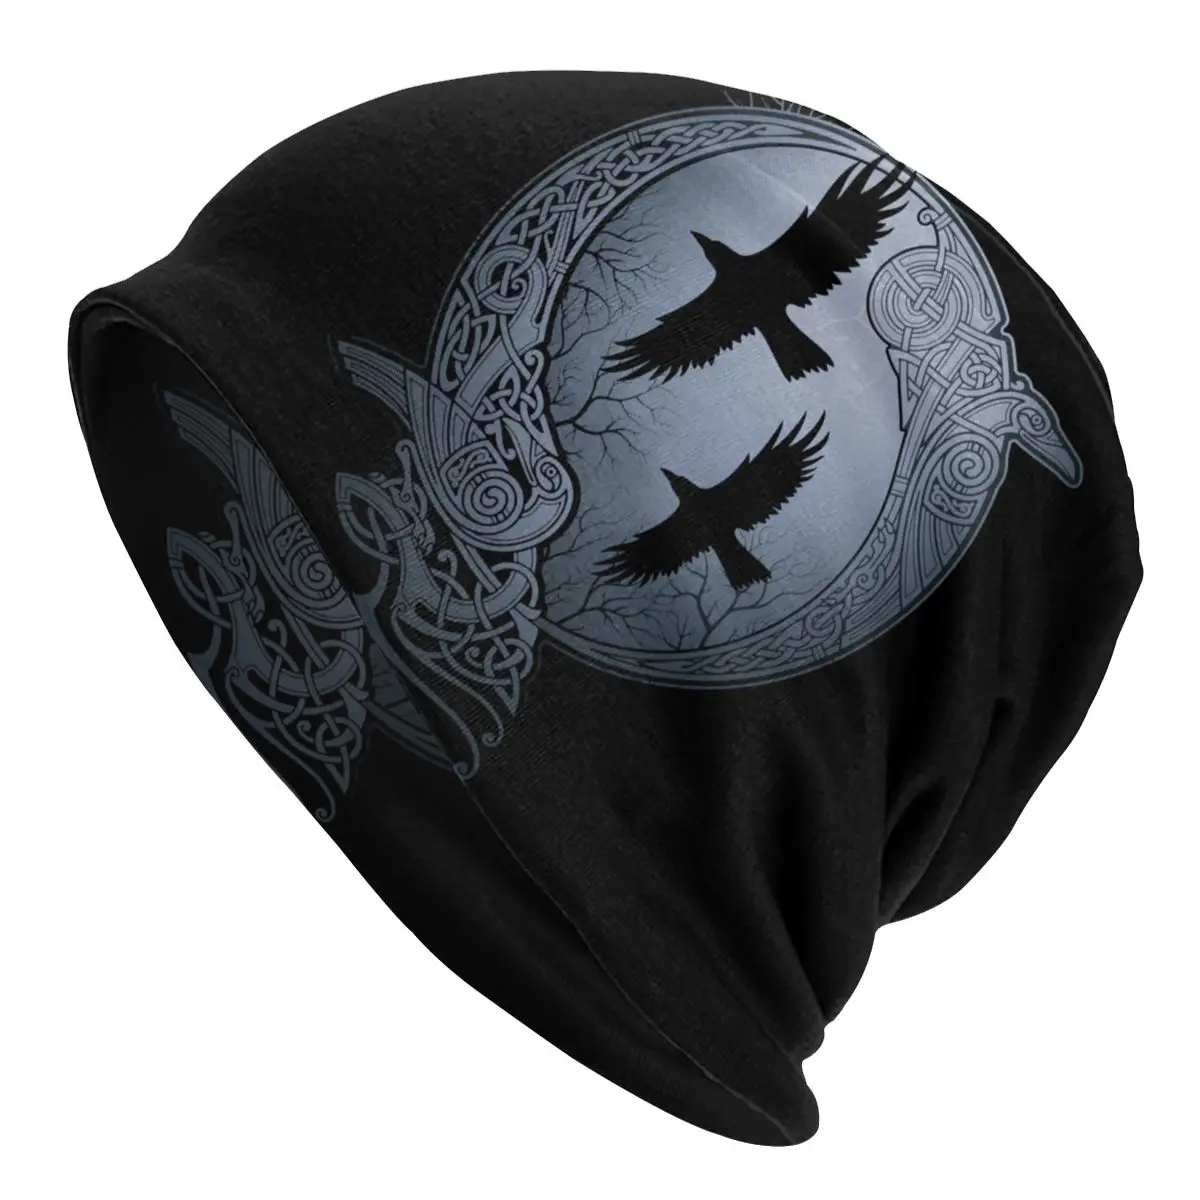 Odin Ravens Bonnet Hats Femme Knitted Hat For Women Men Winter Warm Viking Norse Huginn and Muninn Skullies Beanies Caps 1